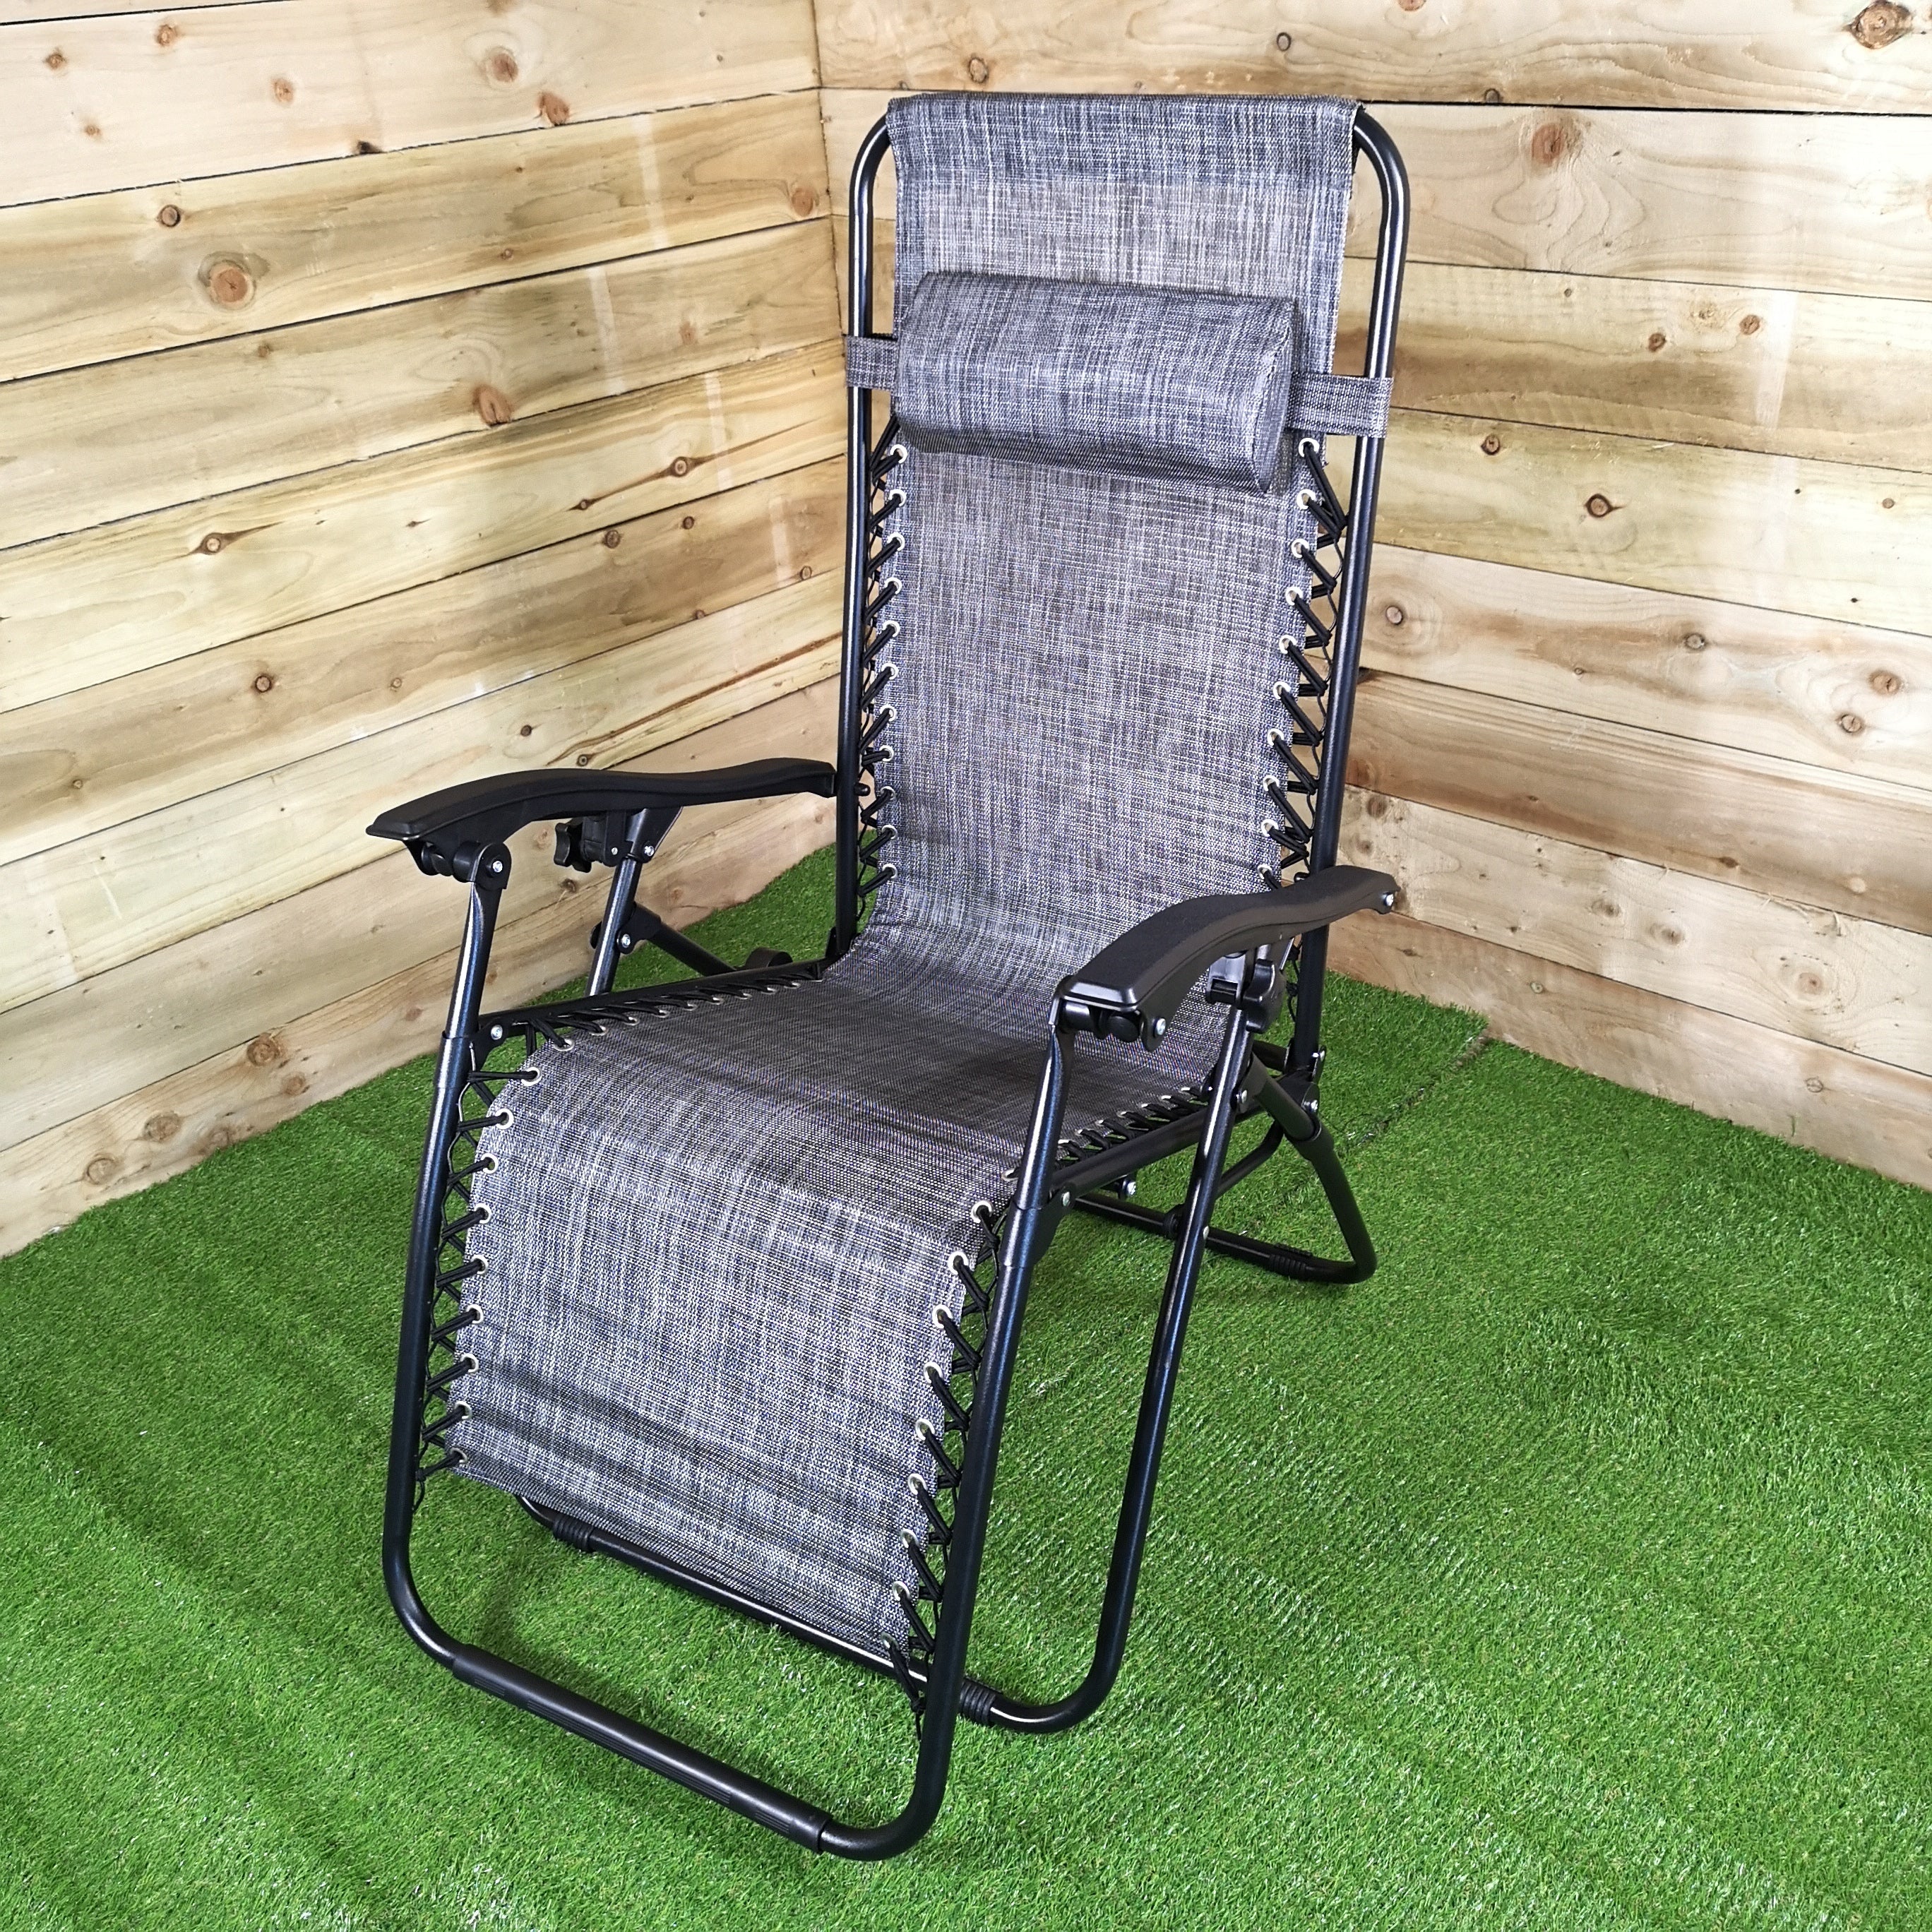 Luxury Zero Gravity Garden Relaxer Chair / Sun Lounger - Grey